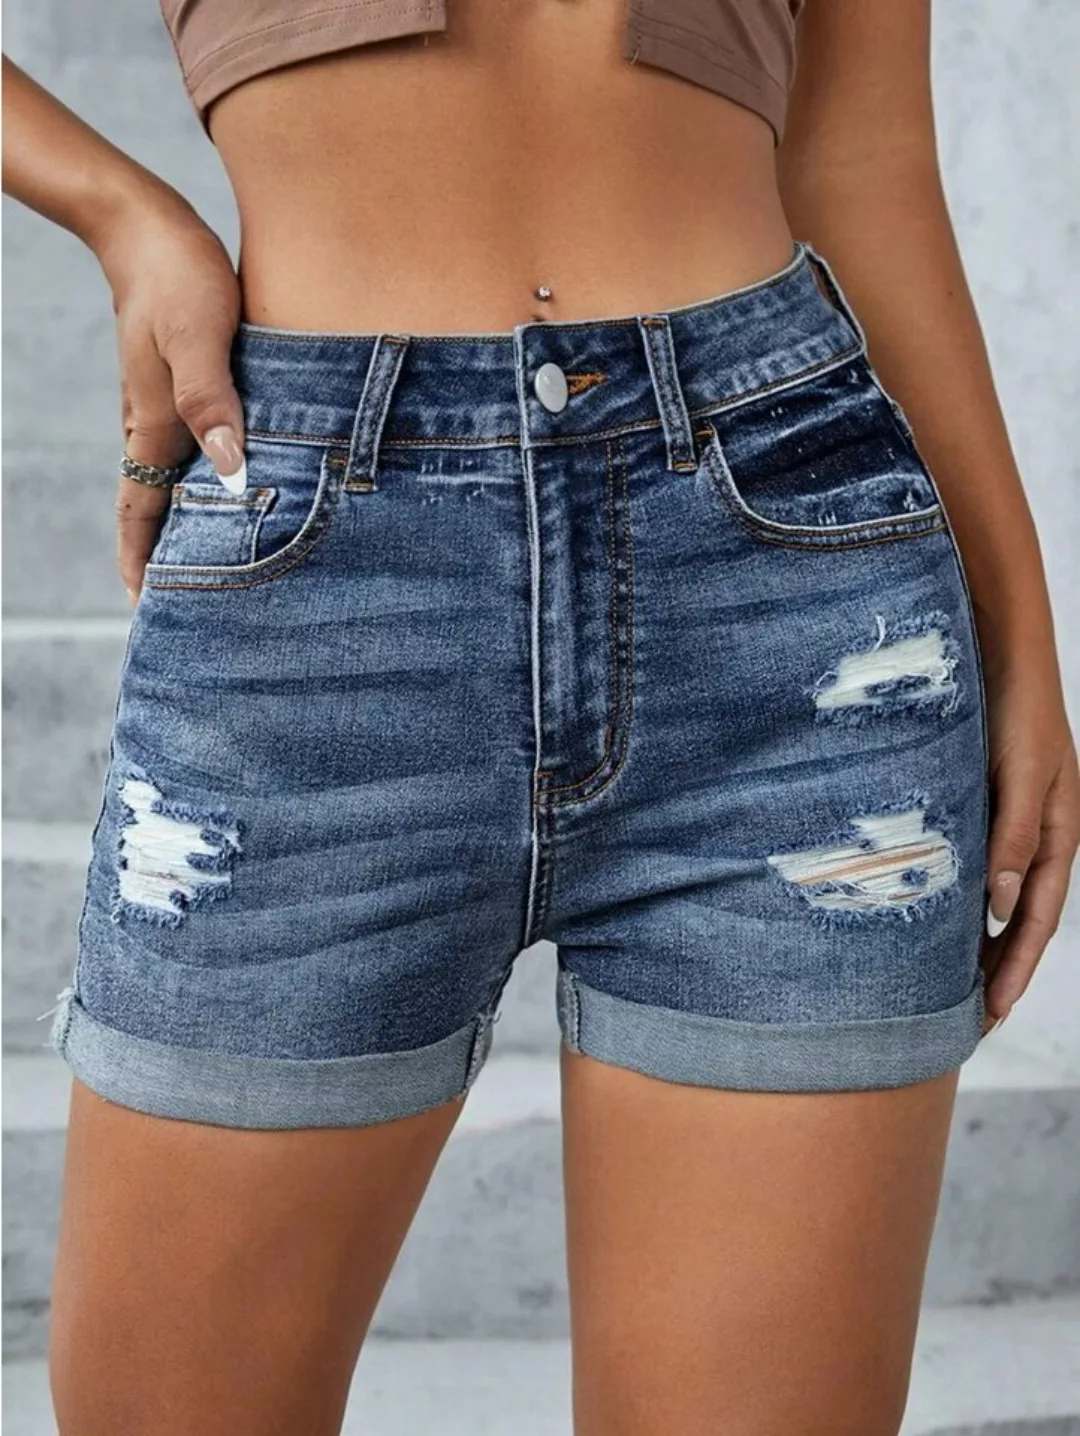 FIDDY Jeansshorts Stretch Jeans - zerrissene Jeans Shorts -Relaxshorts günstig online kaufen